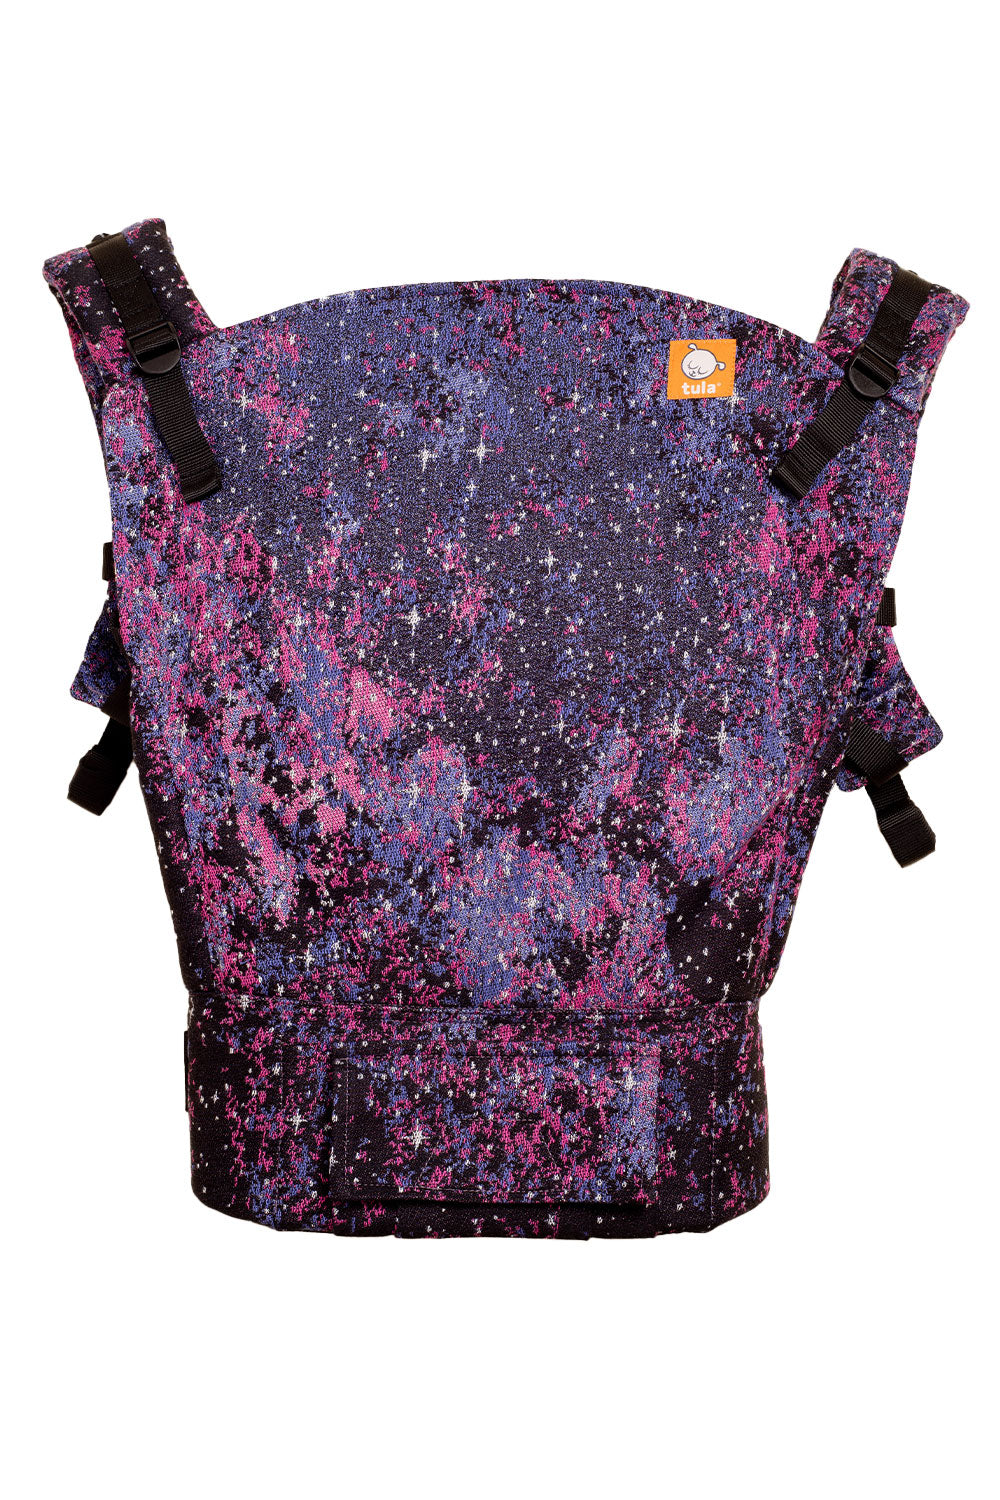 Nebula - Signature Woven Toddler Carrier